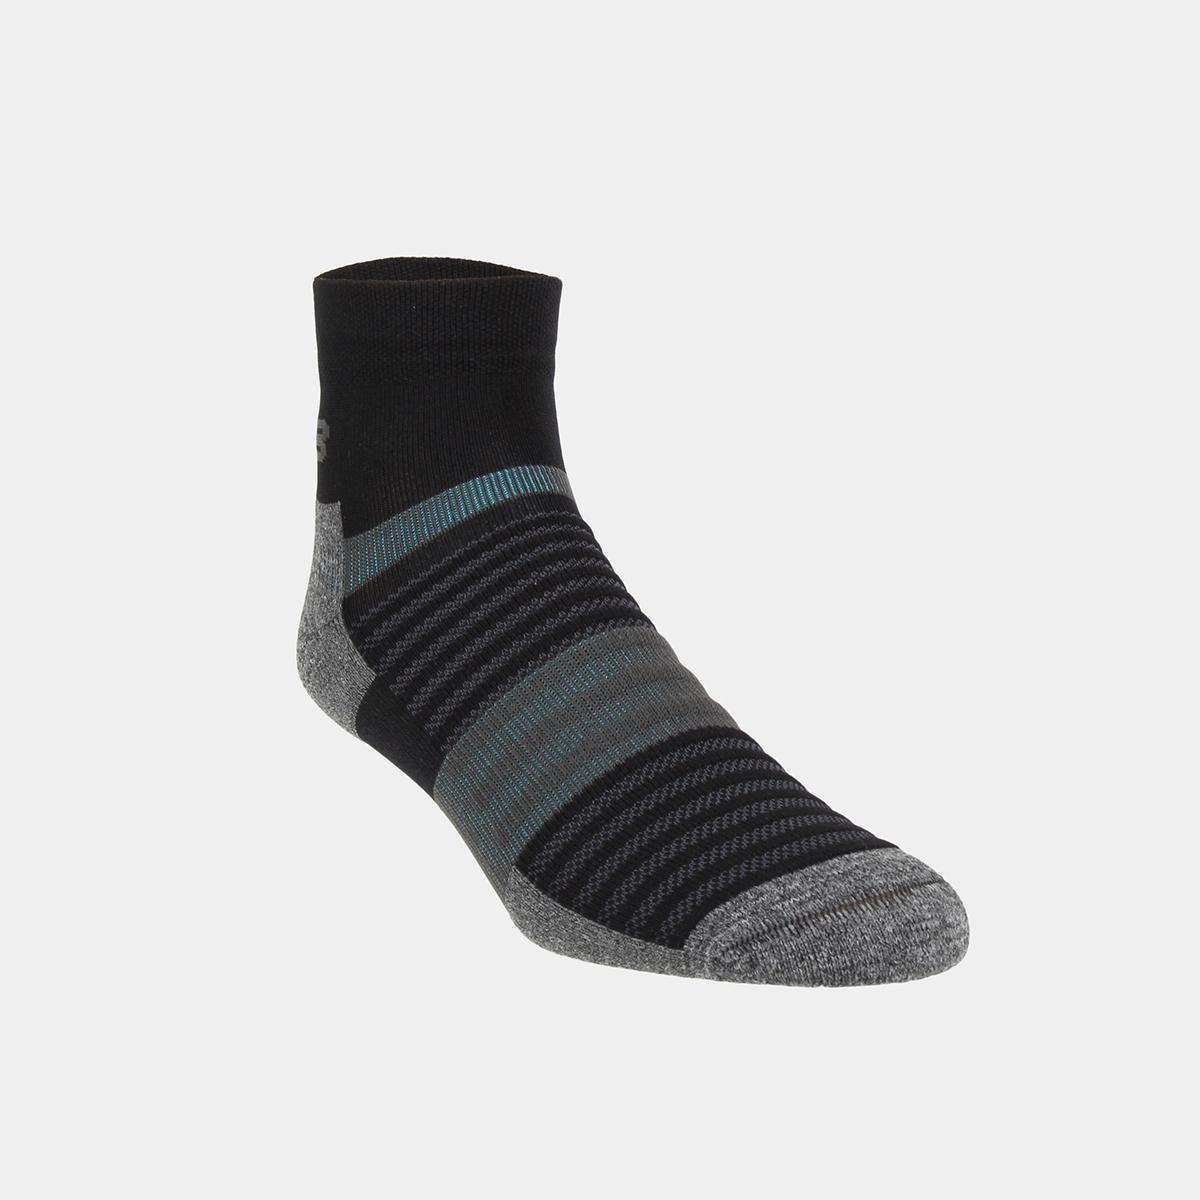 Inov-8 Active Mid Socks - Black